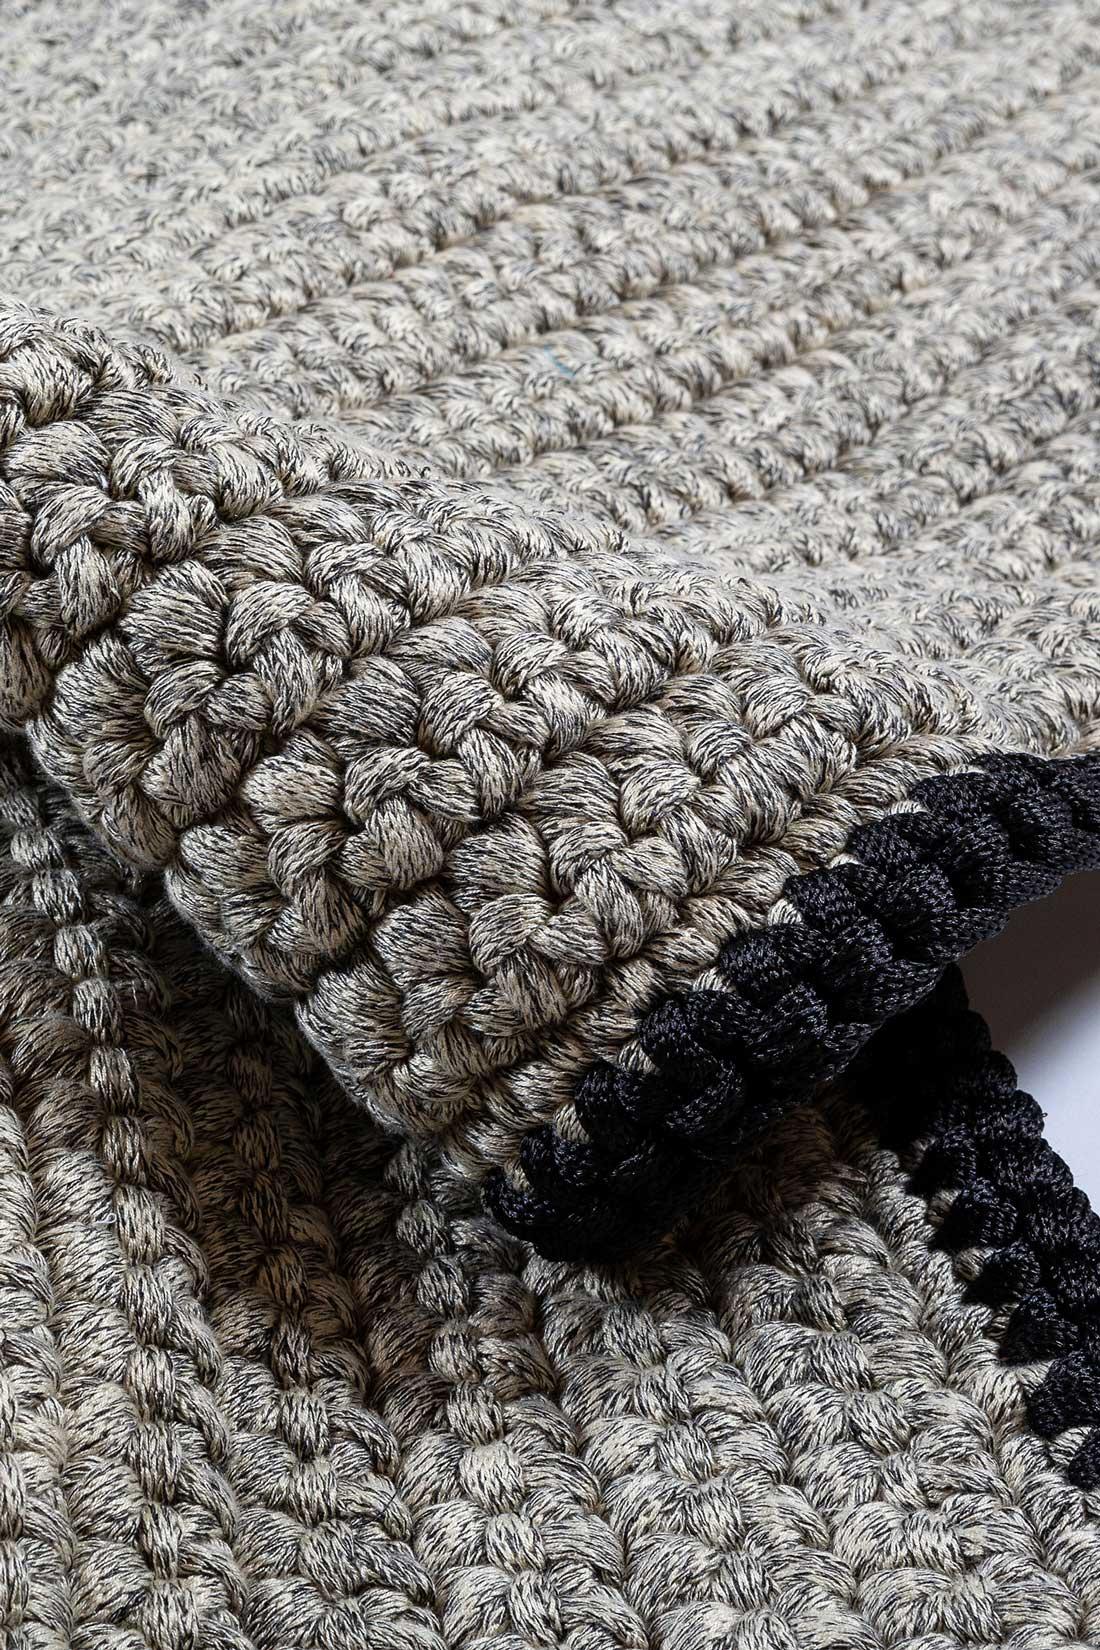 Israeli Handmade Crochet Thick Rug 170x240 cm in Grey Beige Black Colors For Sale